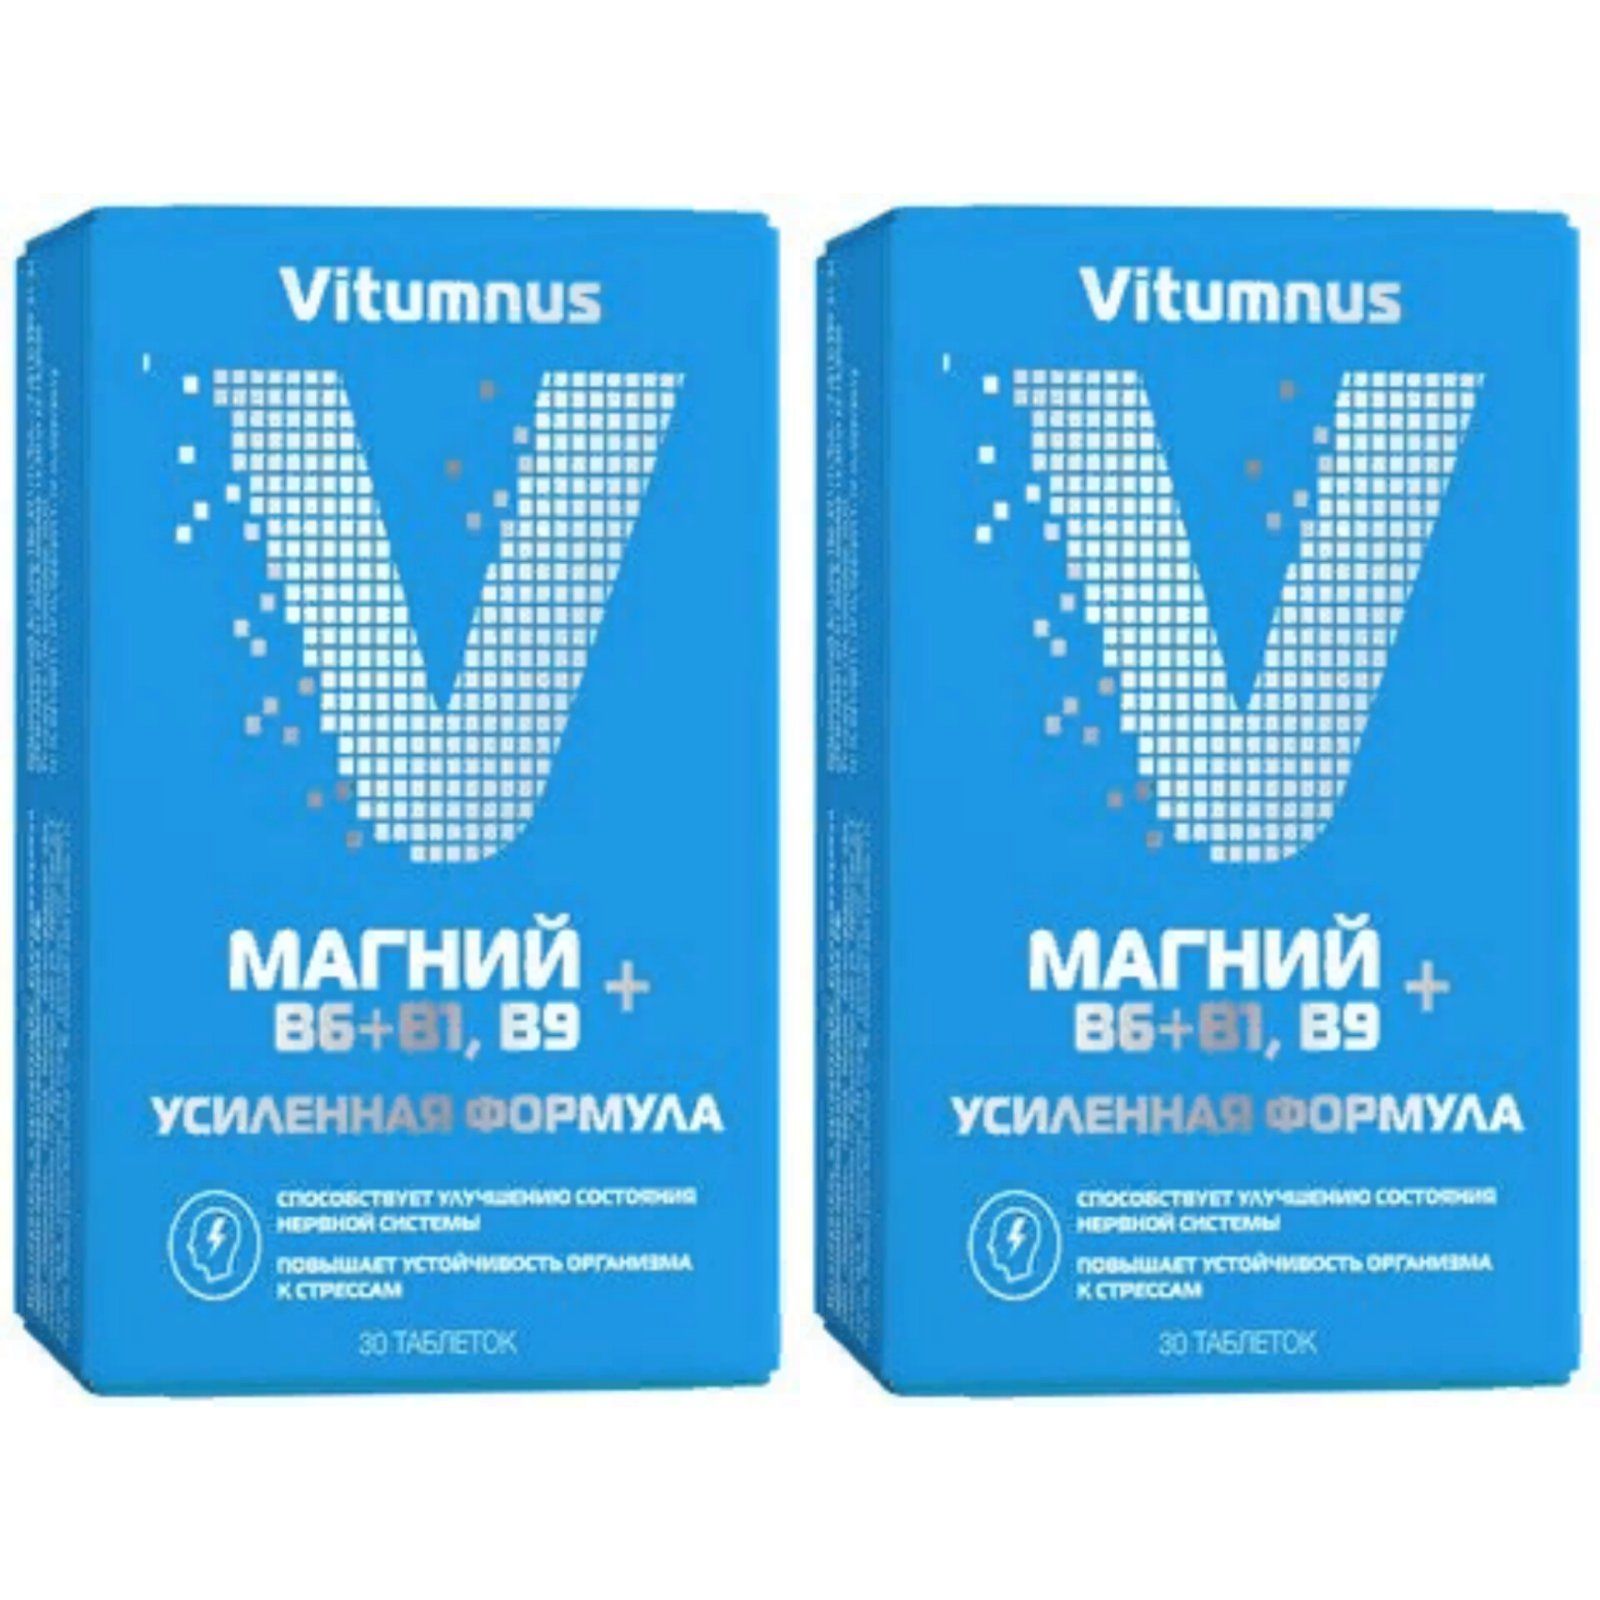 Vitumnus д3 витамин. Магний витамины. Vitumnus магний Хелат. Магний цитрат Vitumnus. Магний раствор б6 Vitumnus.